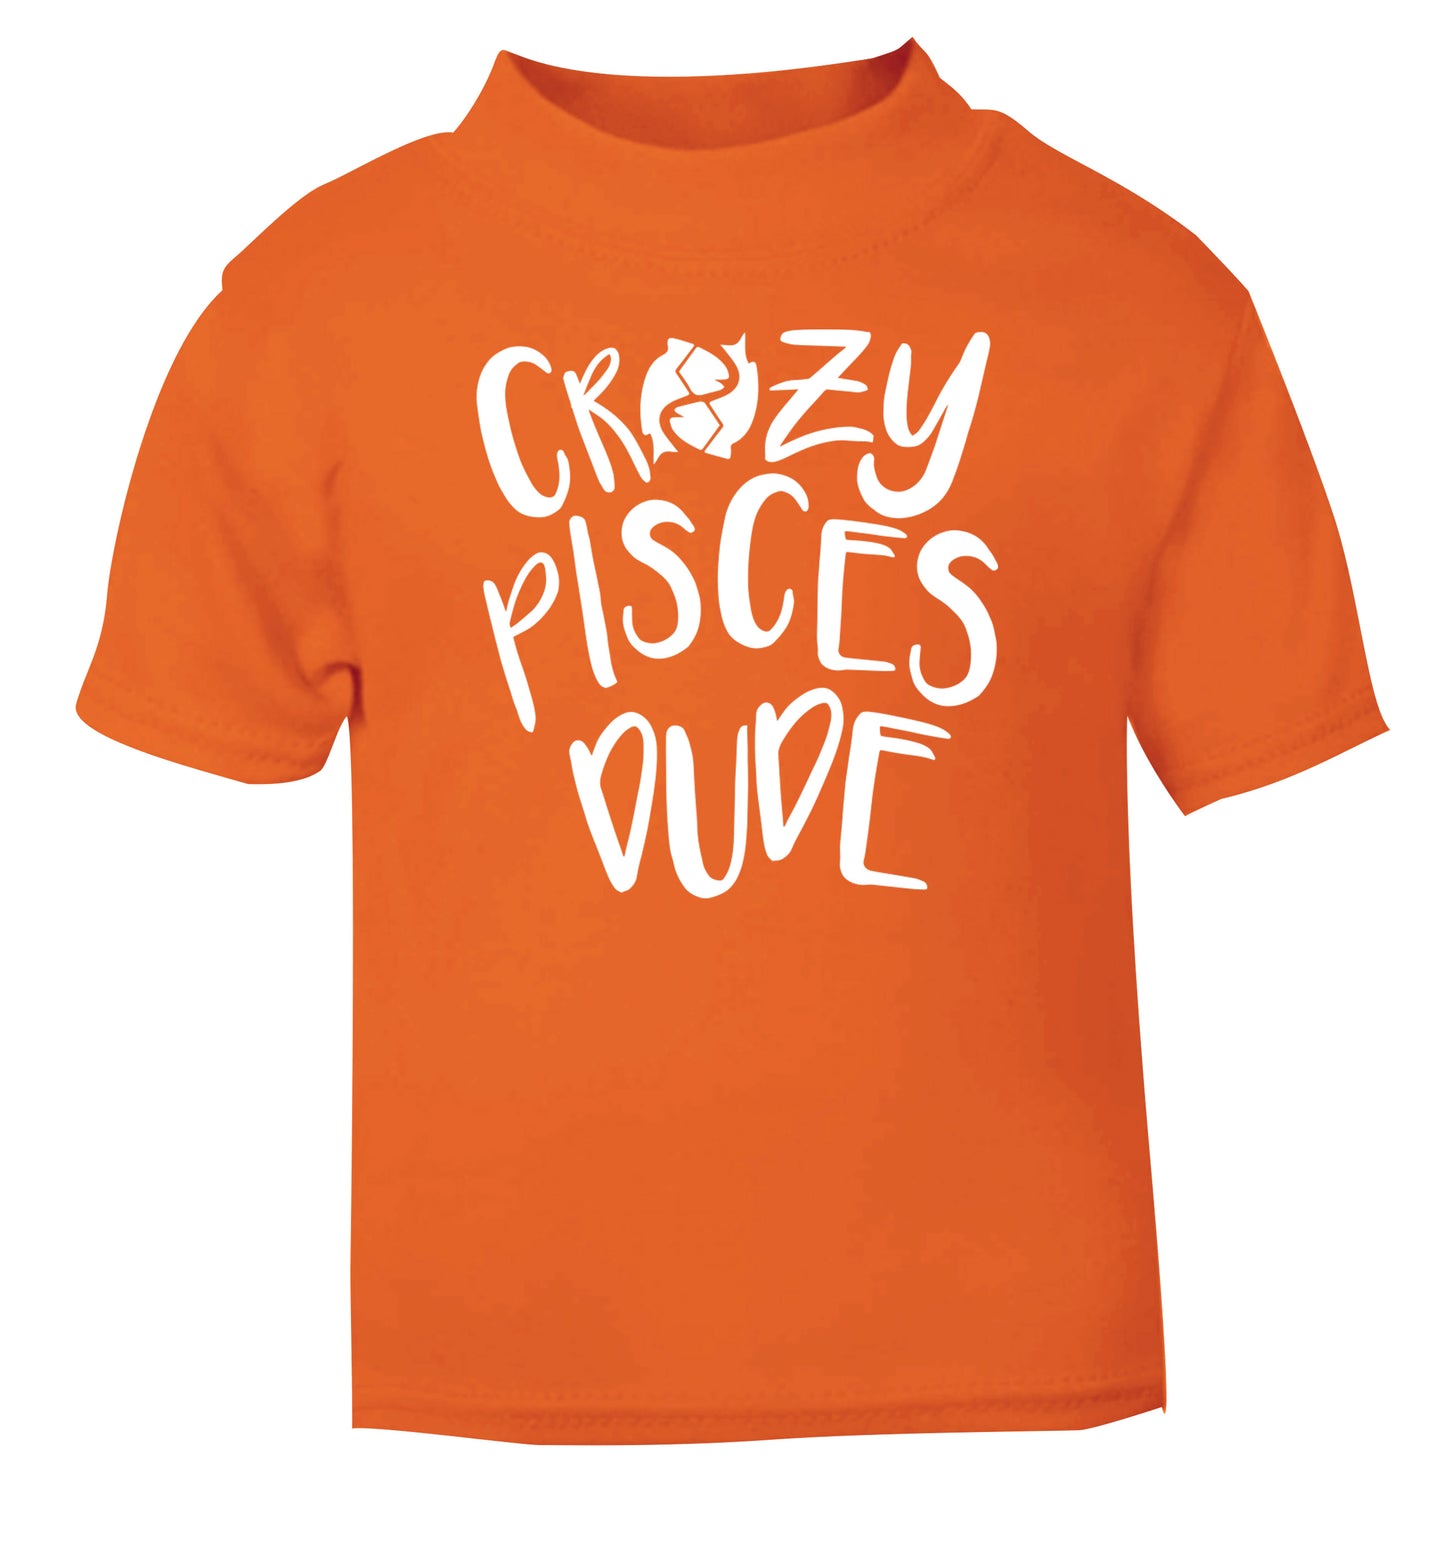 Crazy pisces dude orange Baby Toddler Tshirt 2 Years